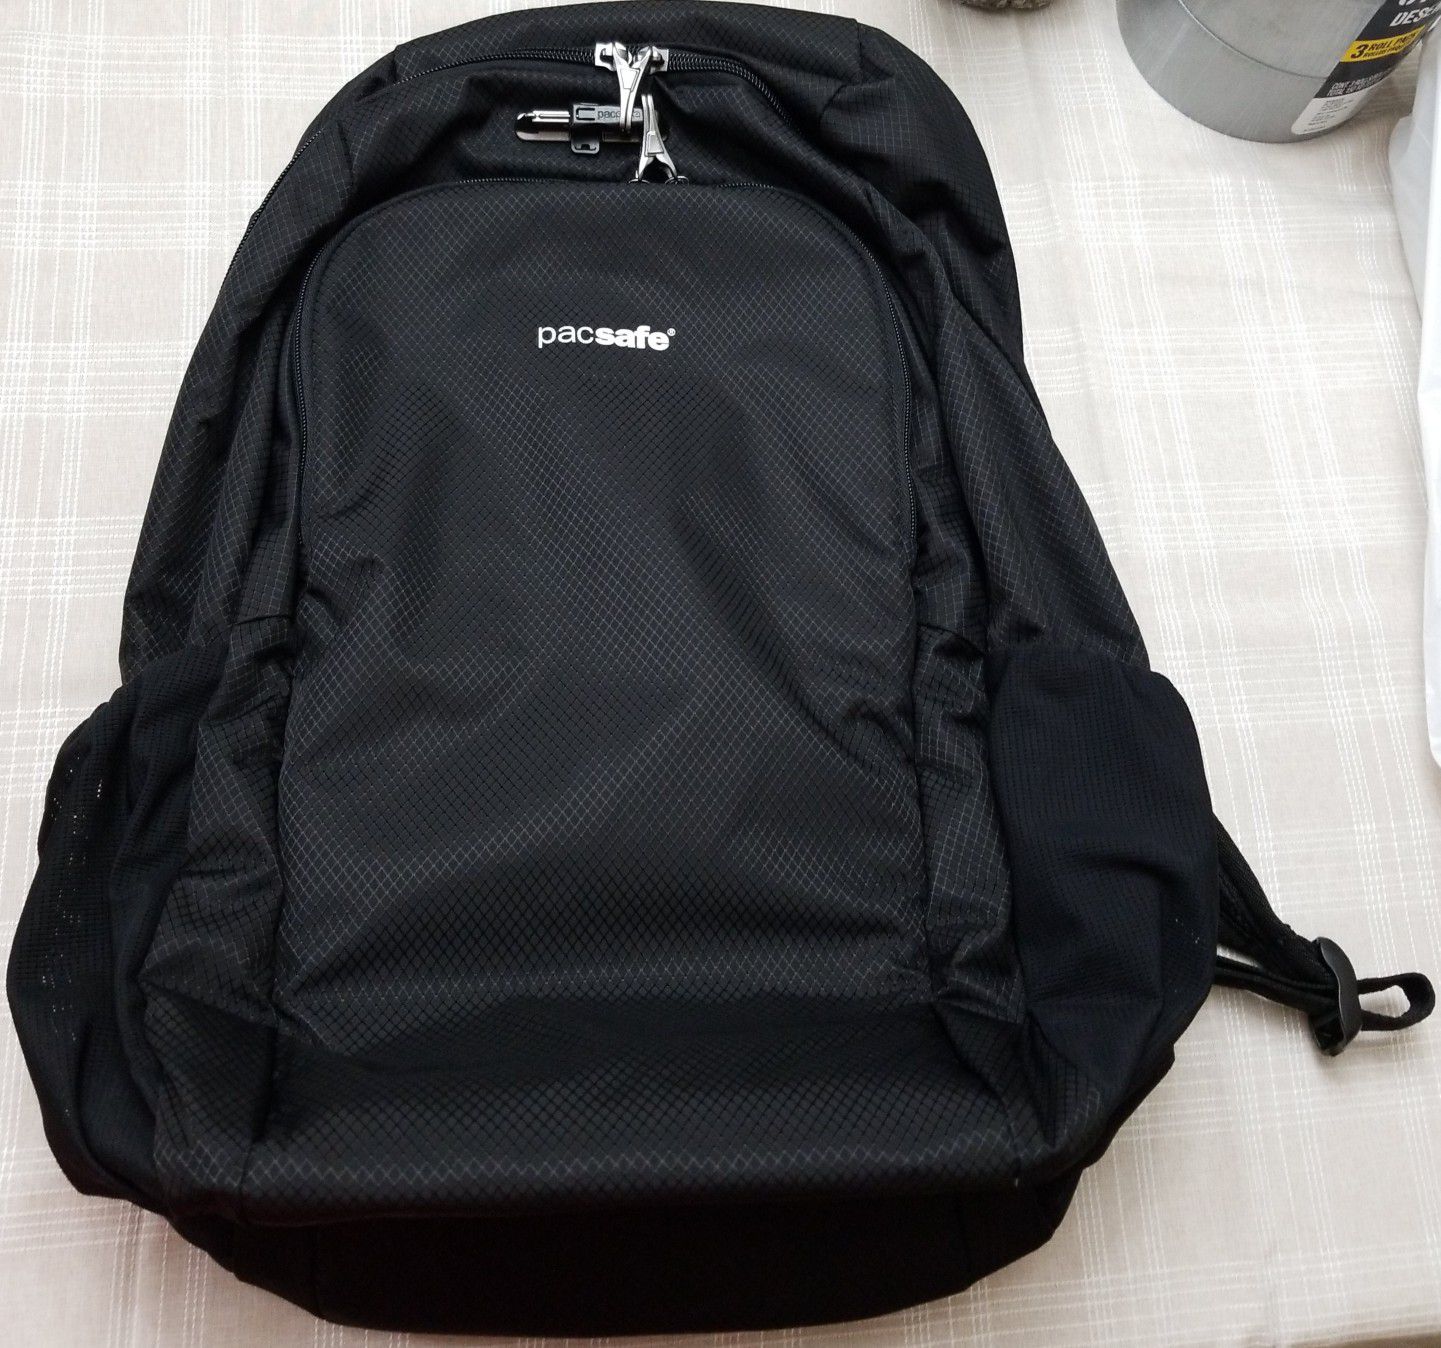 Pacsafe backpack for antitheft